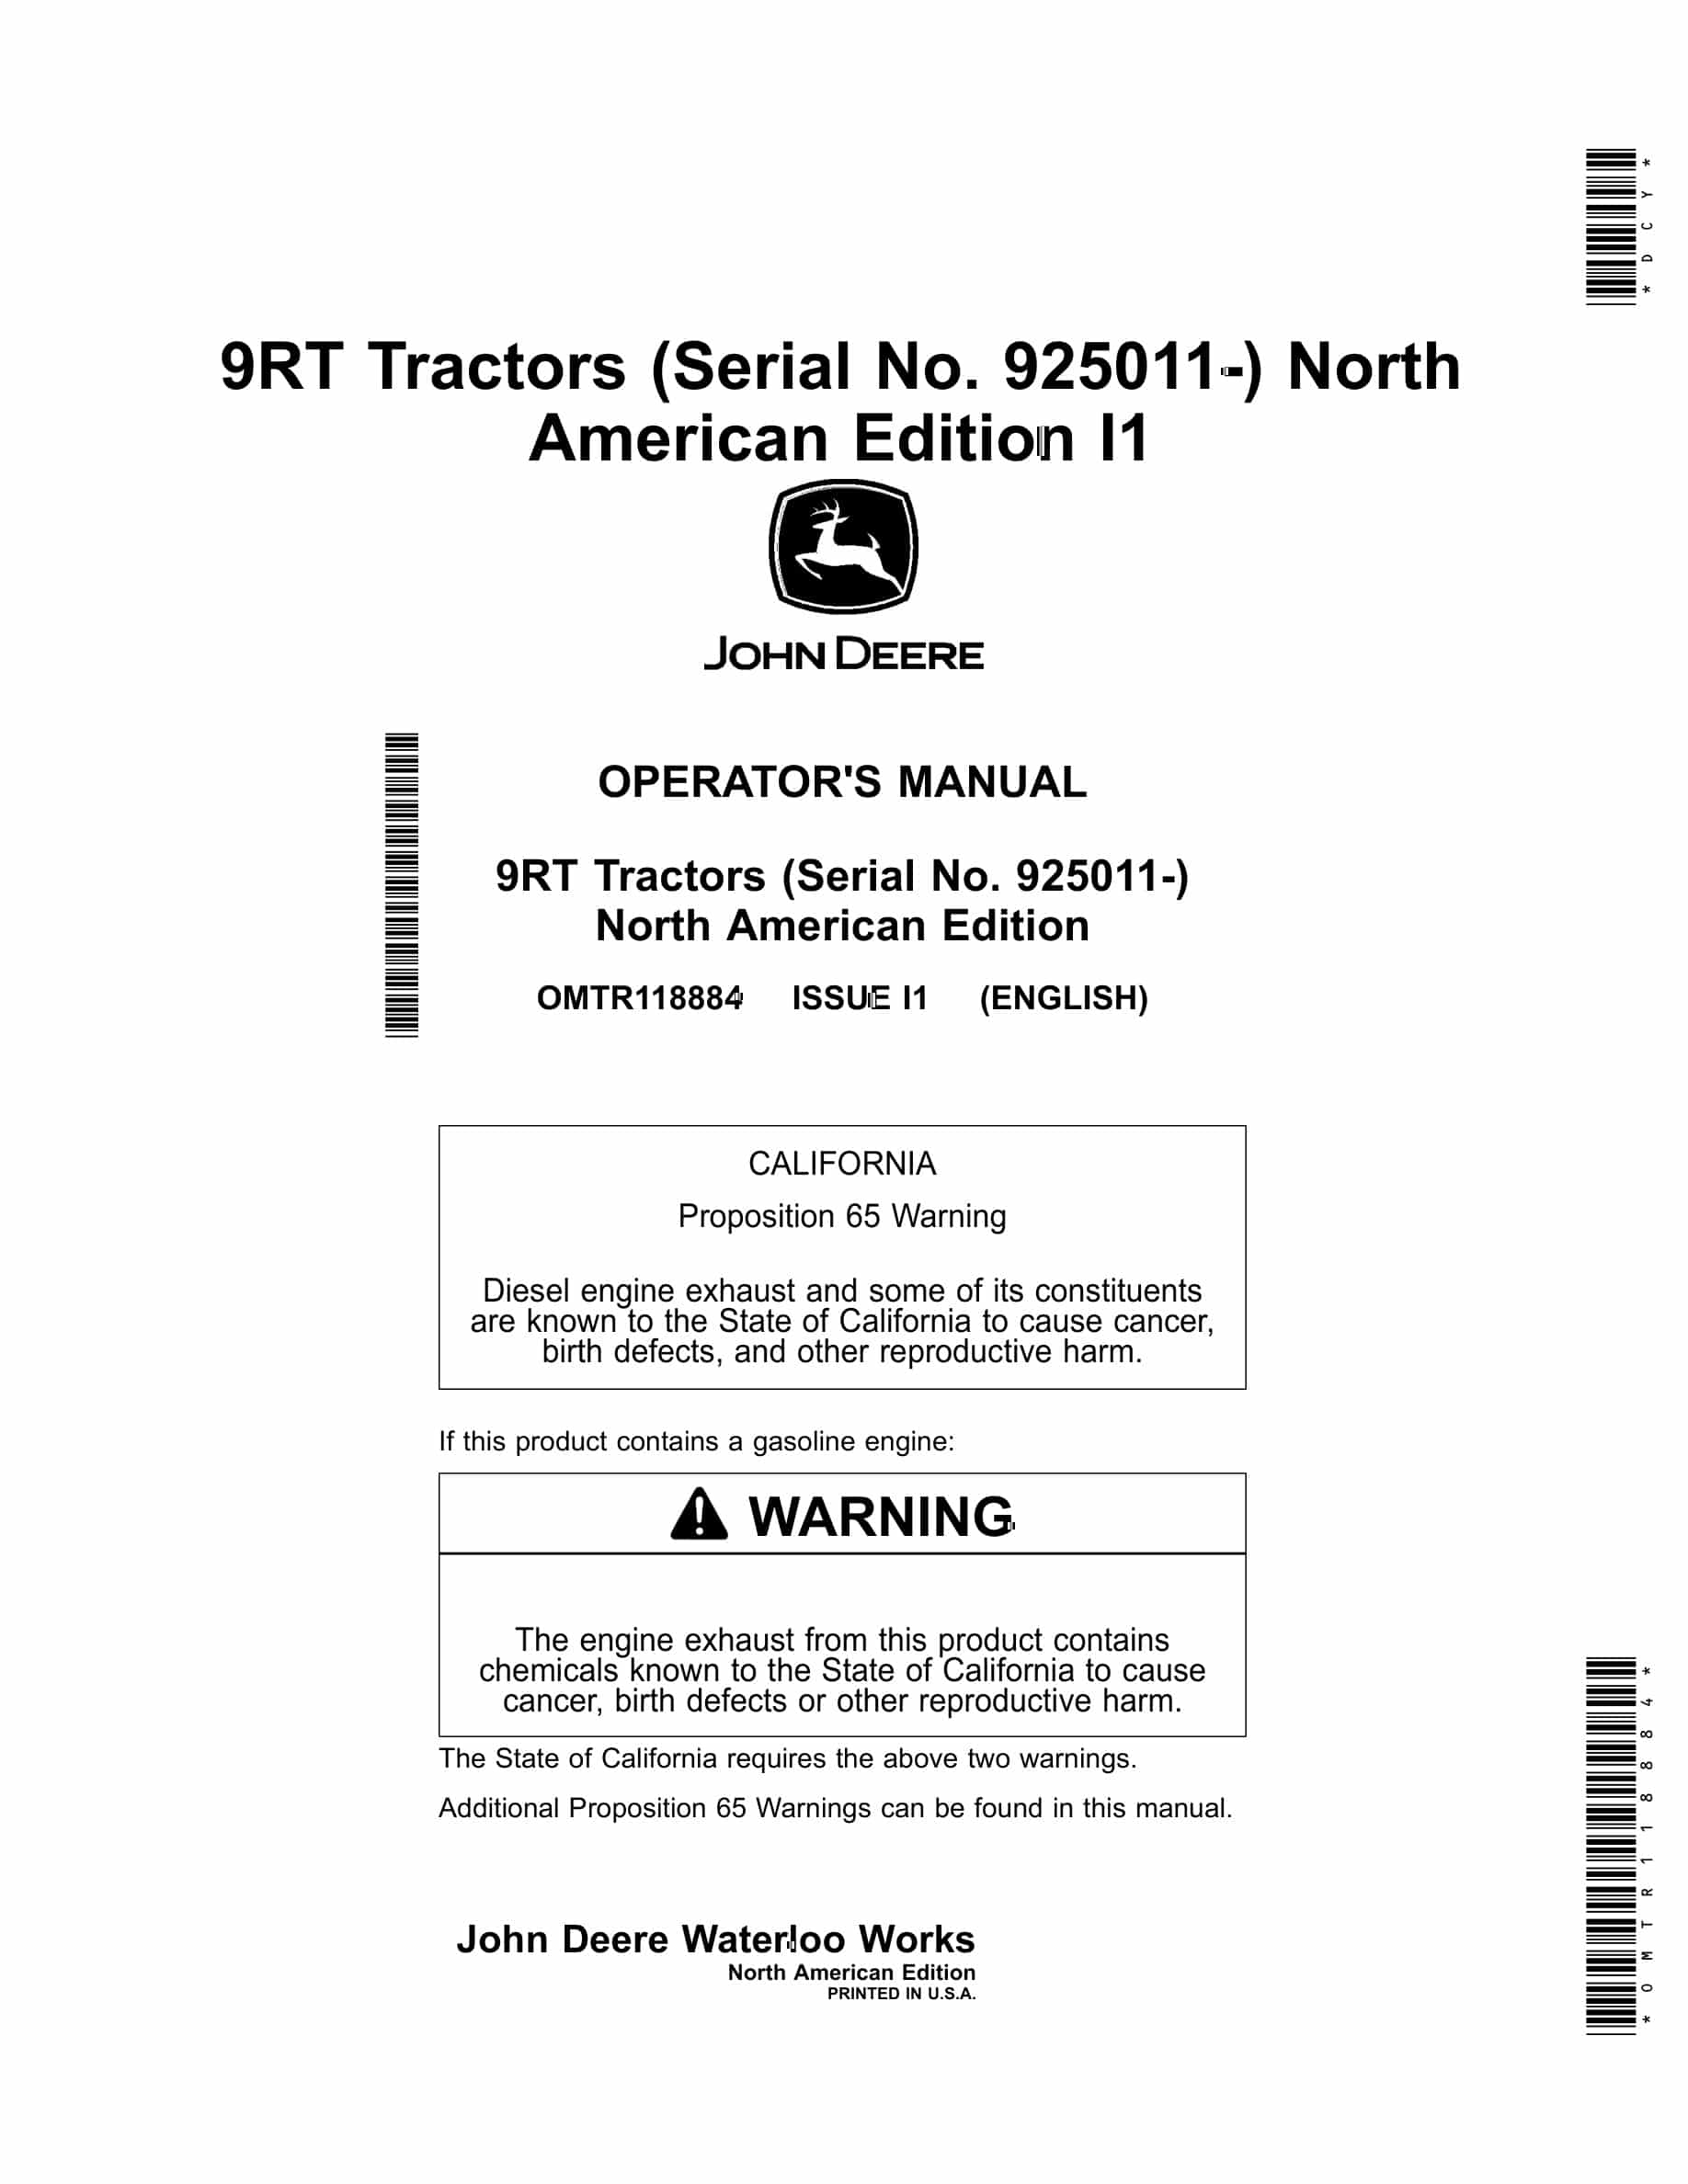 John Deere 9RT Tractor Operator Manual OMTR118884-1